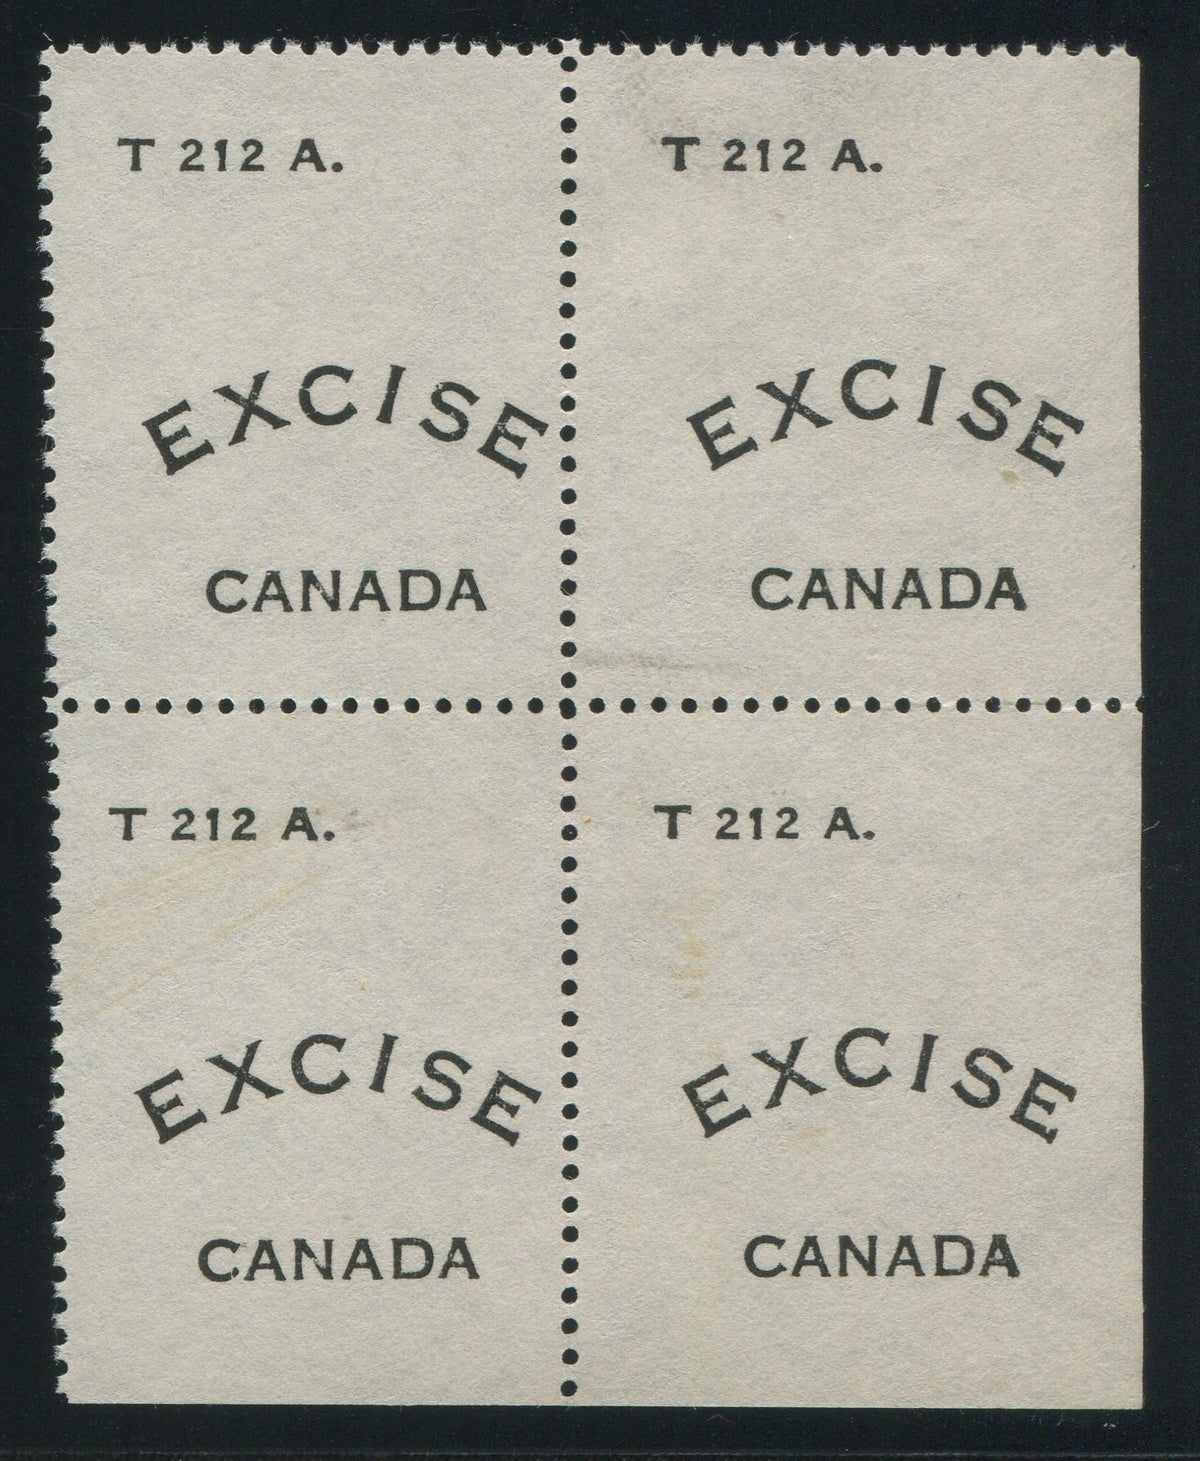 0009PL1708 - FLS9 - Mint Block of 4 - Deveney Stamps Ltd. Canadian Stamps